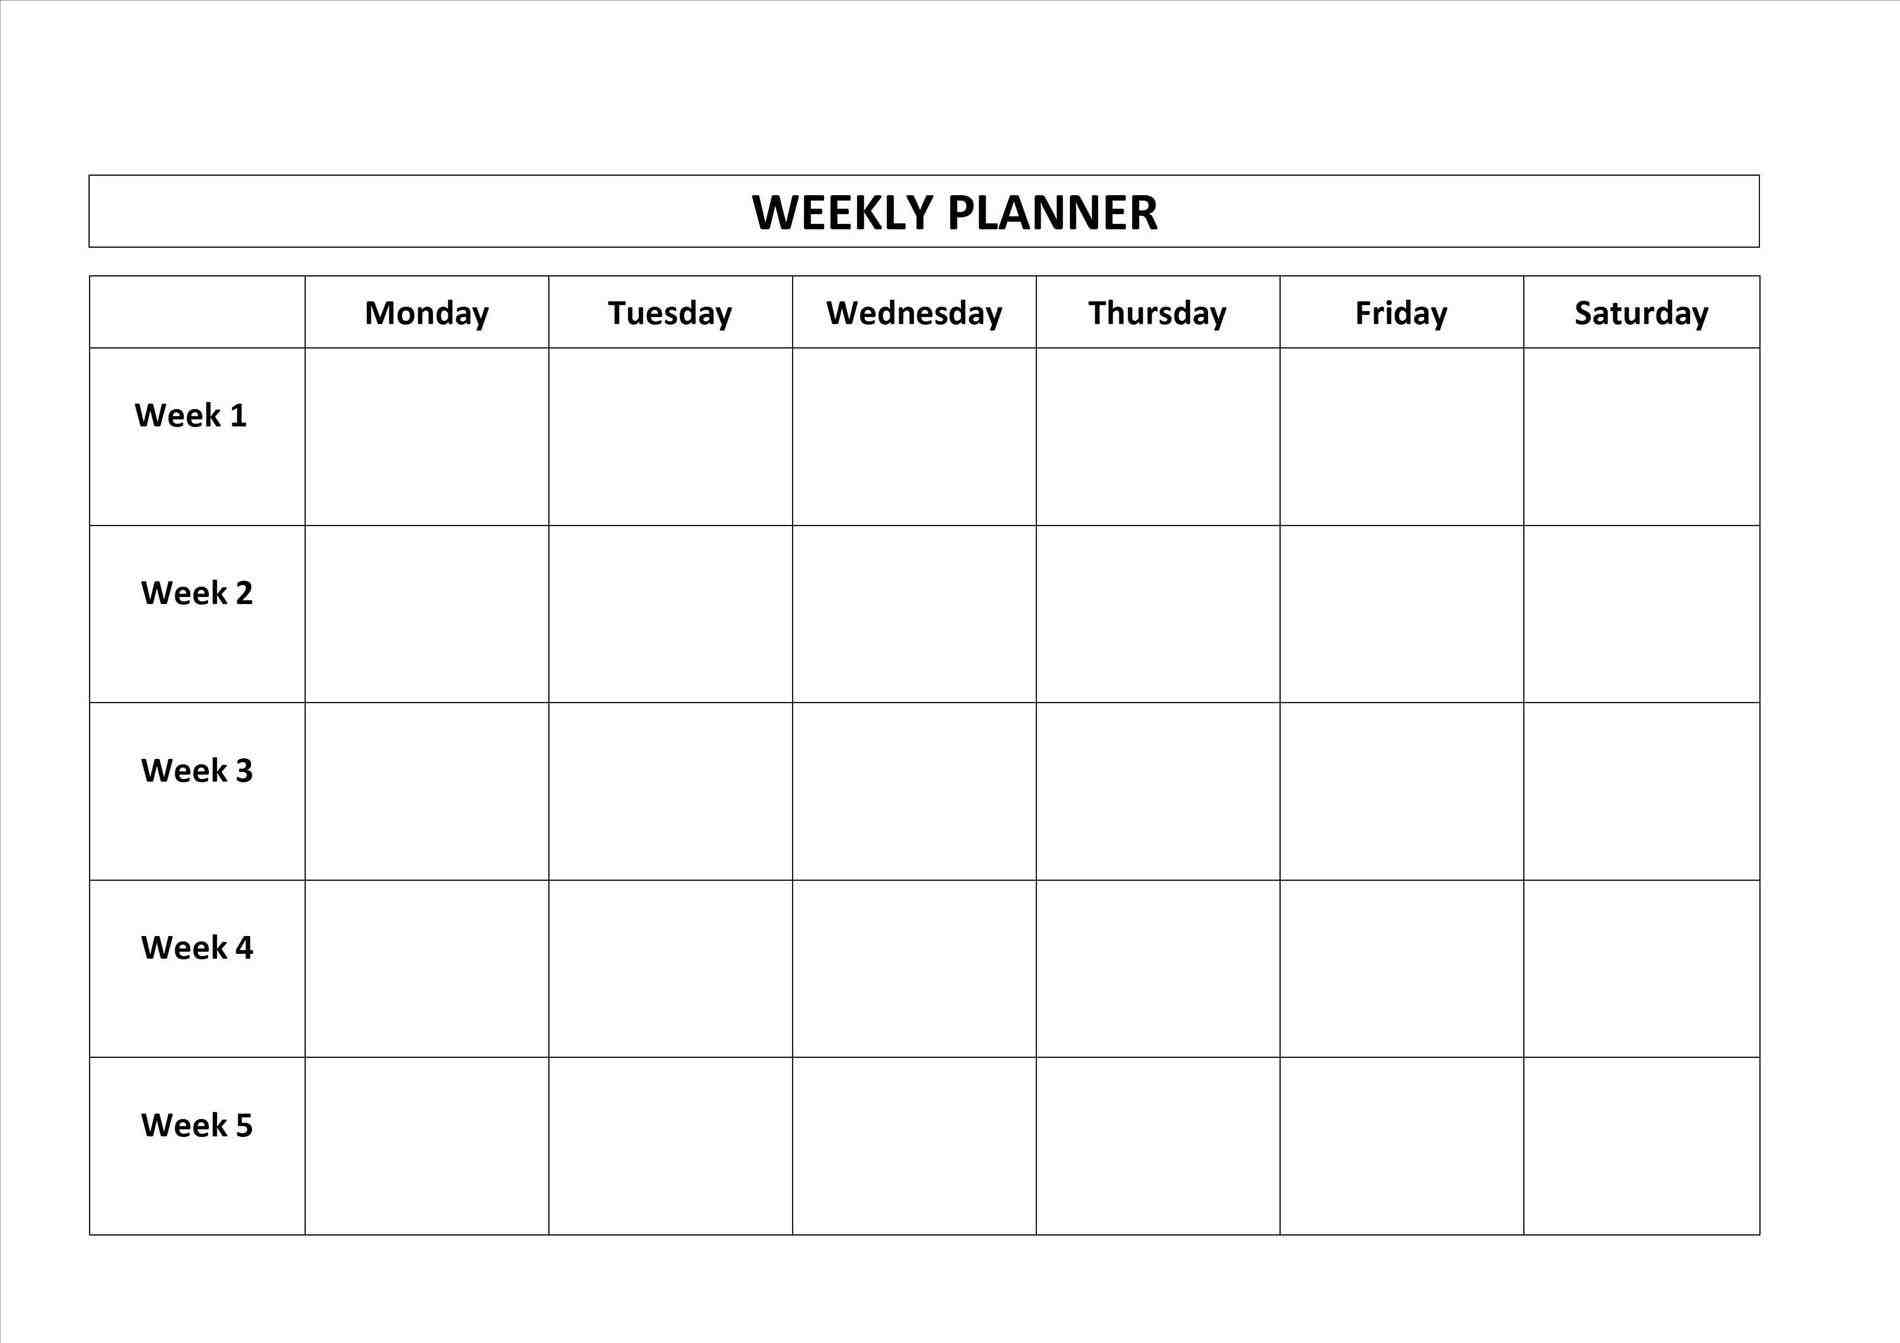 Monday Through Sunday Weekly Horizontal Calendar | Template Calendar throughout Printable Weekly Calendar Monday Through Friday